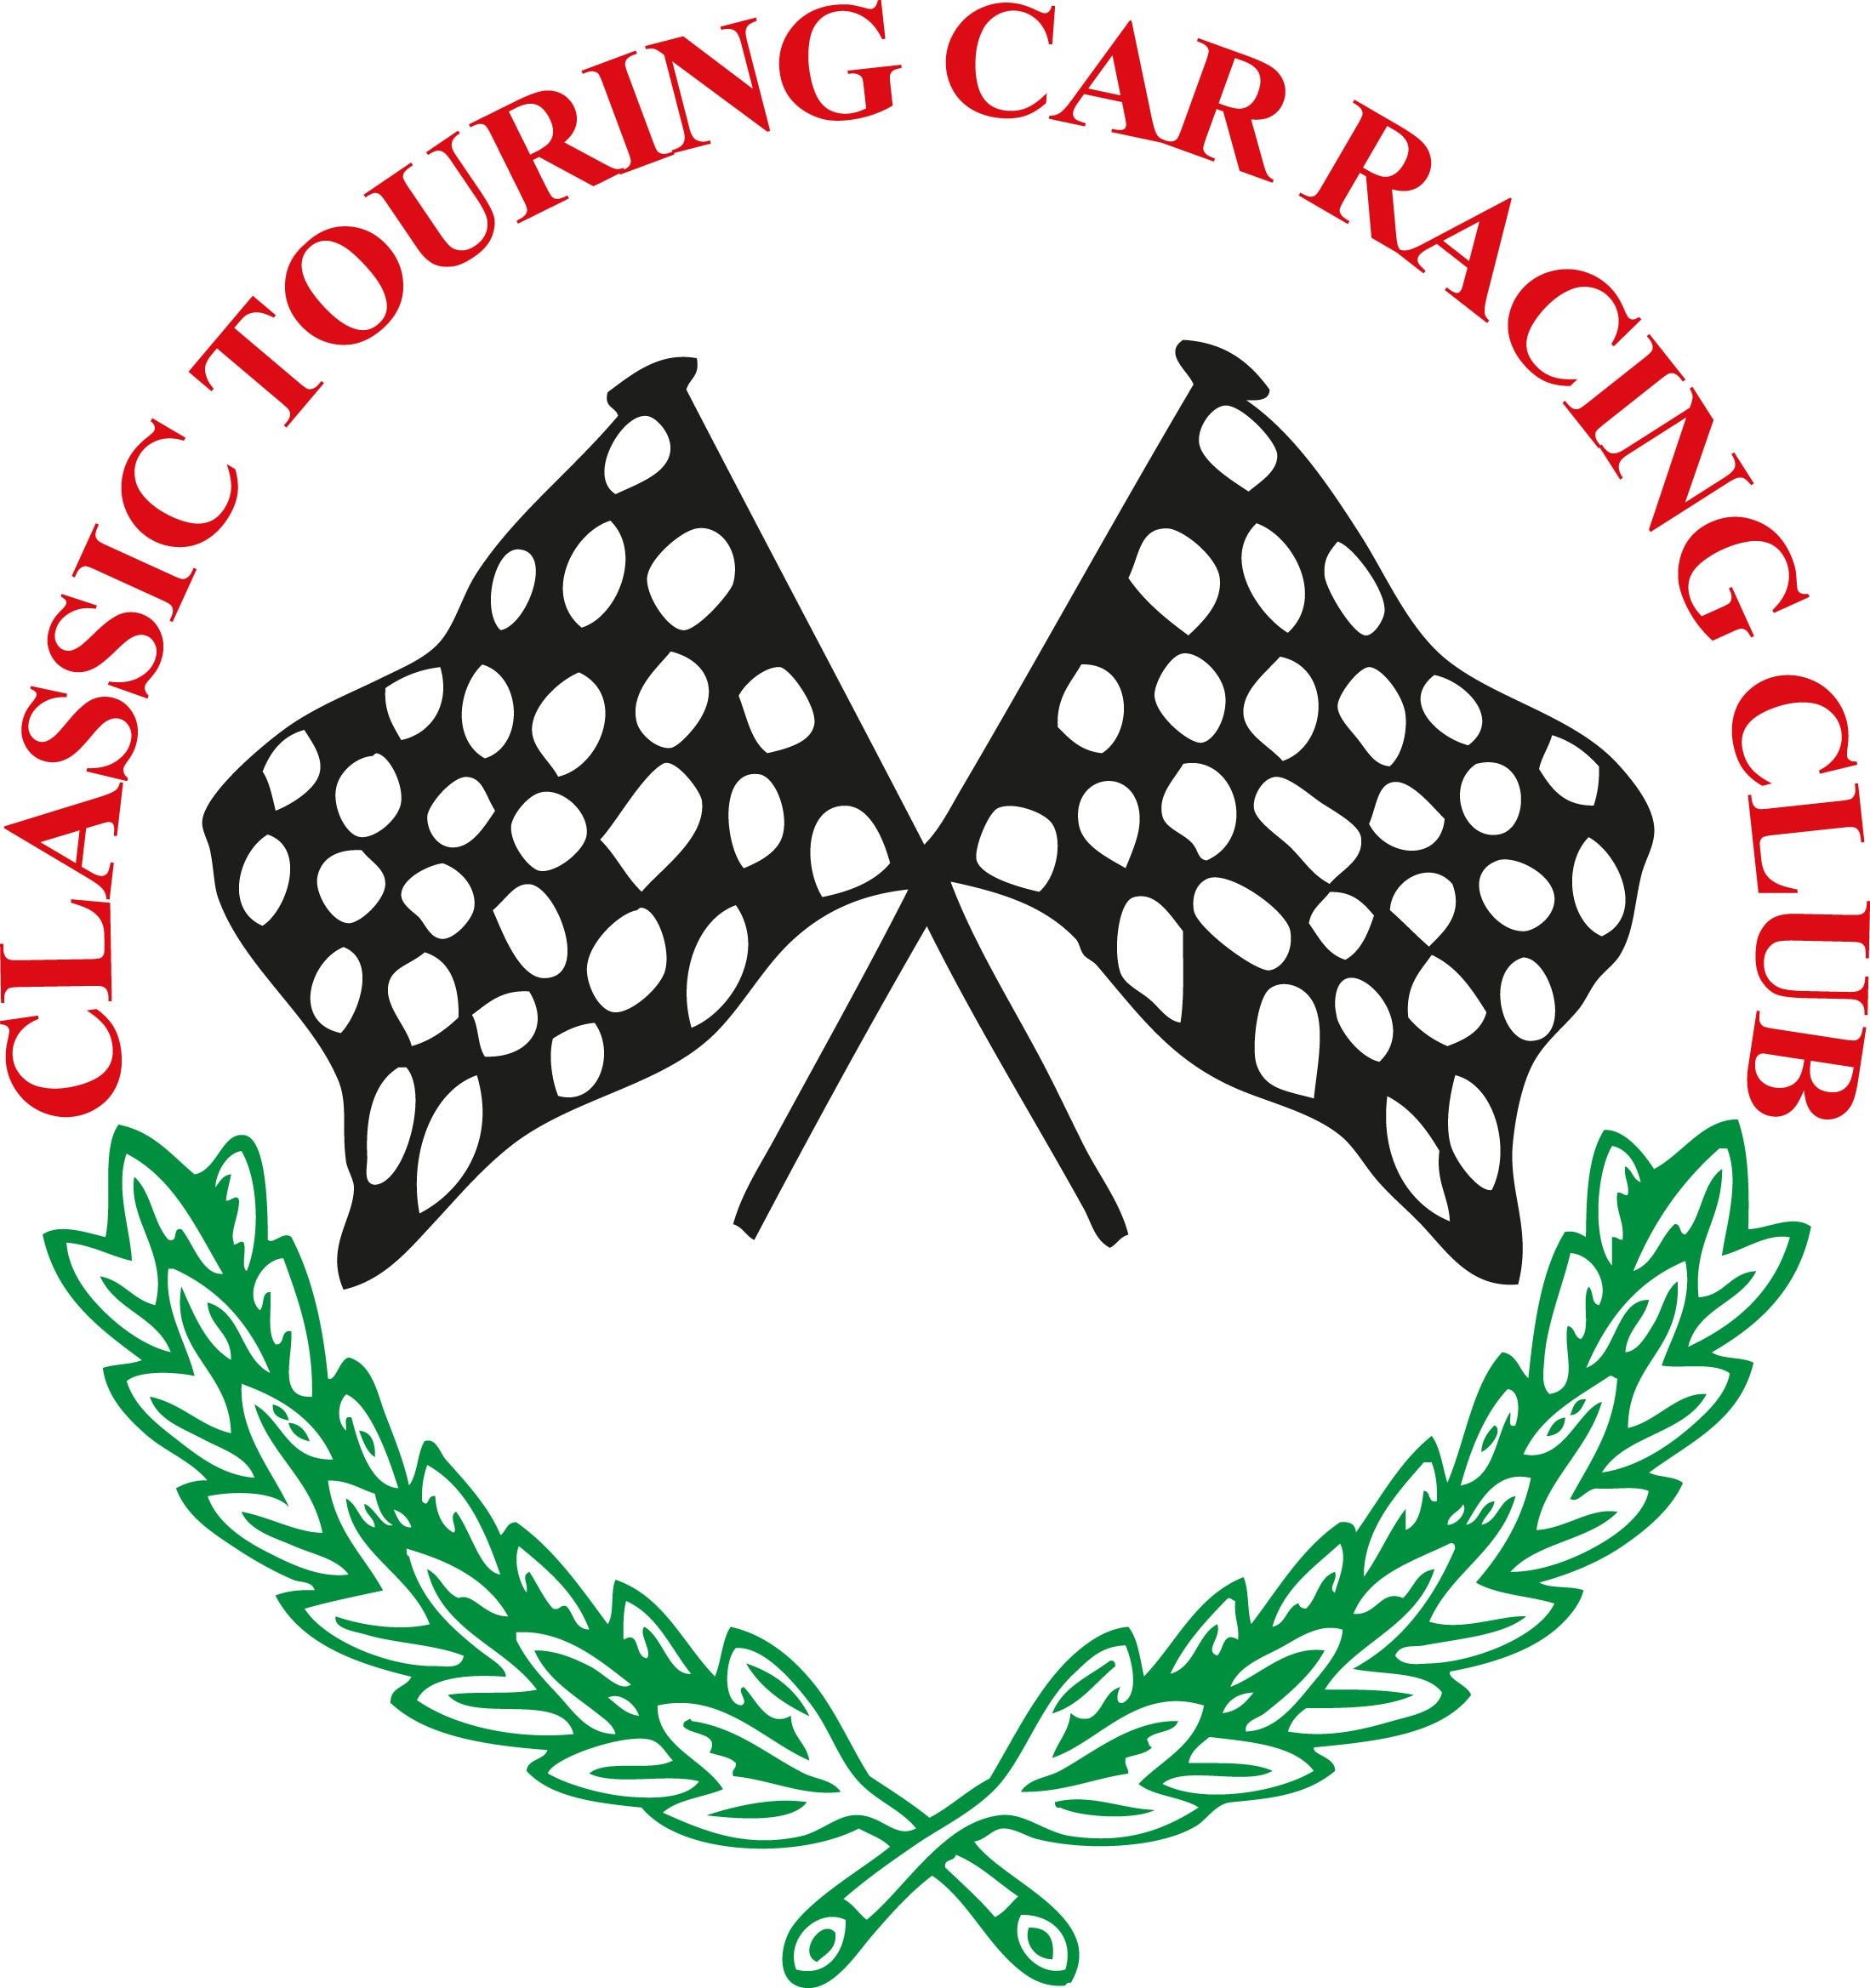 Classic Touring Car Racing Club (CTCRC)